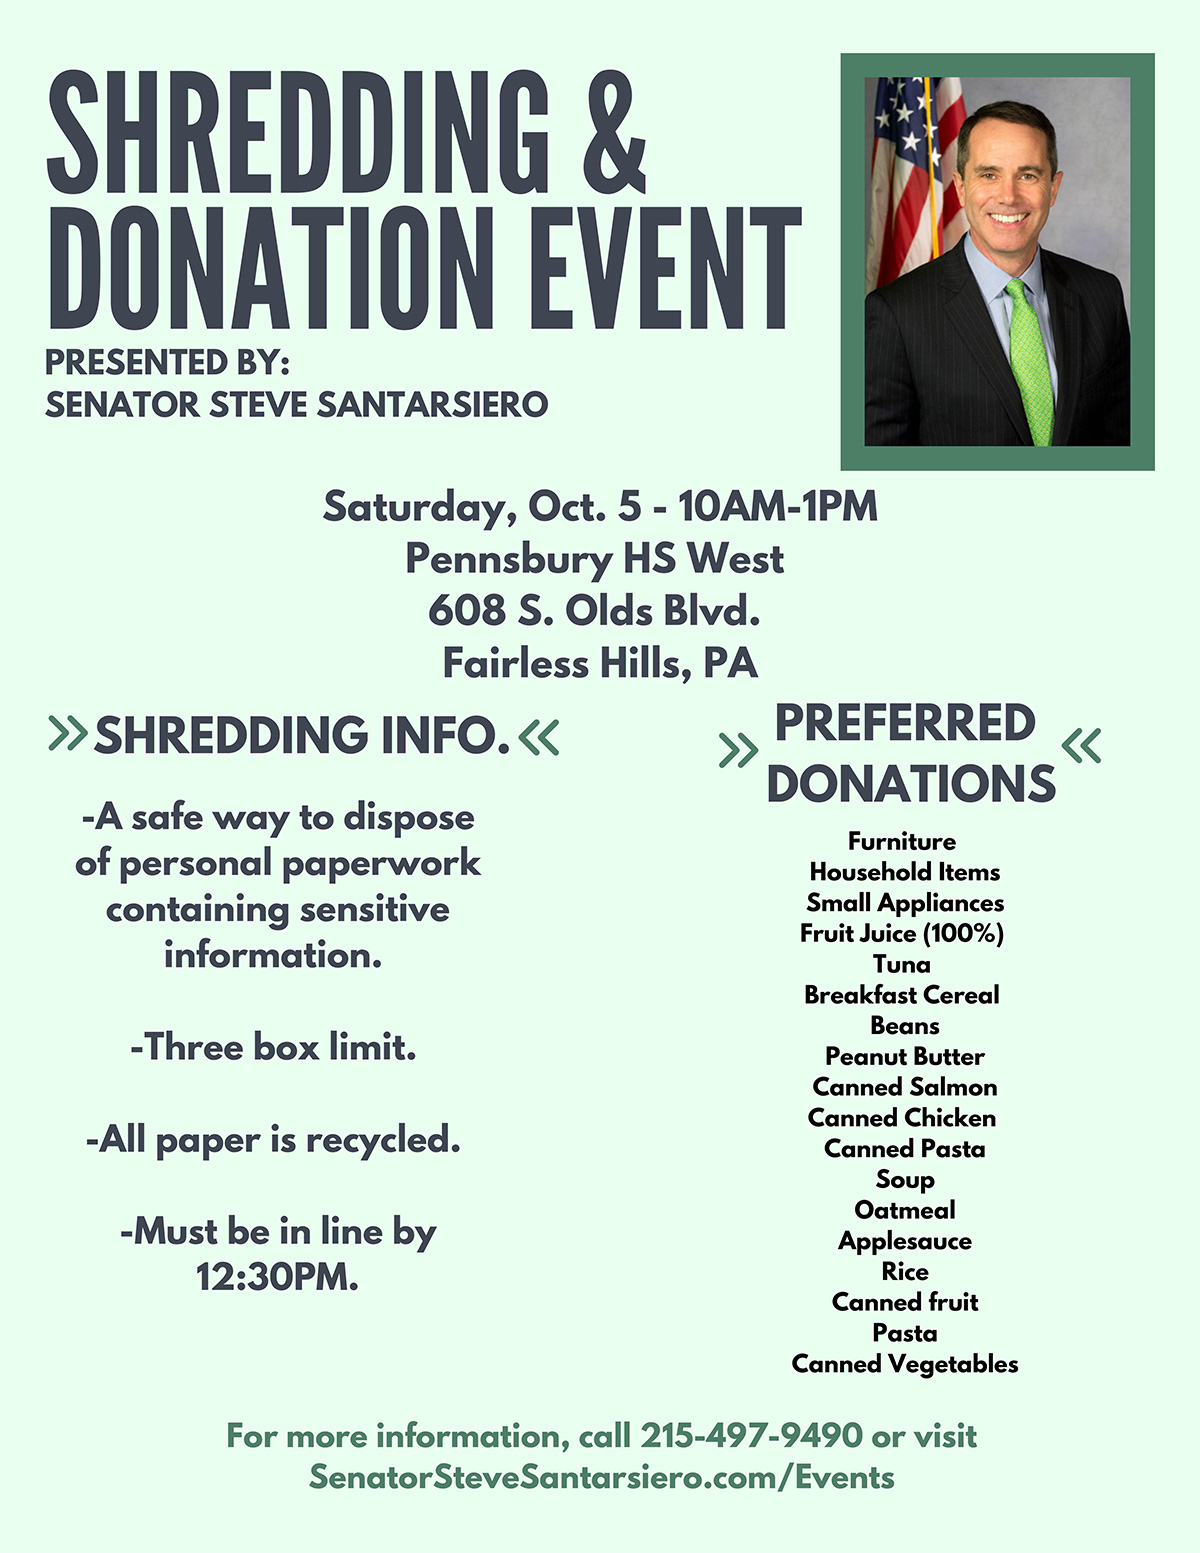 Shredding & Donation Event - October 5, 2019